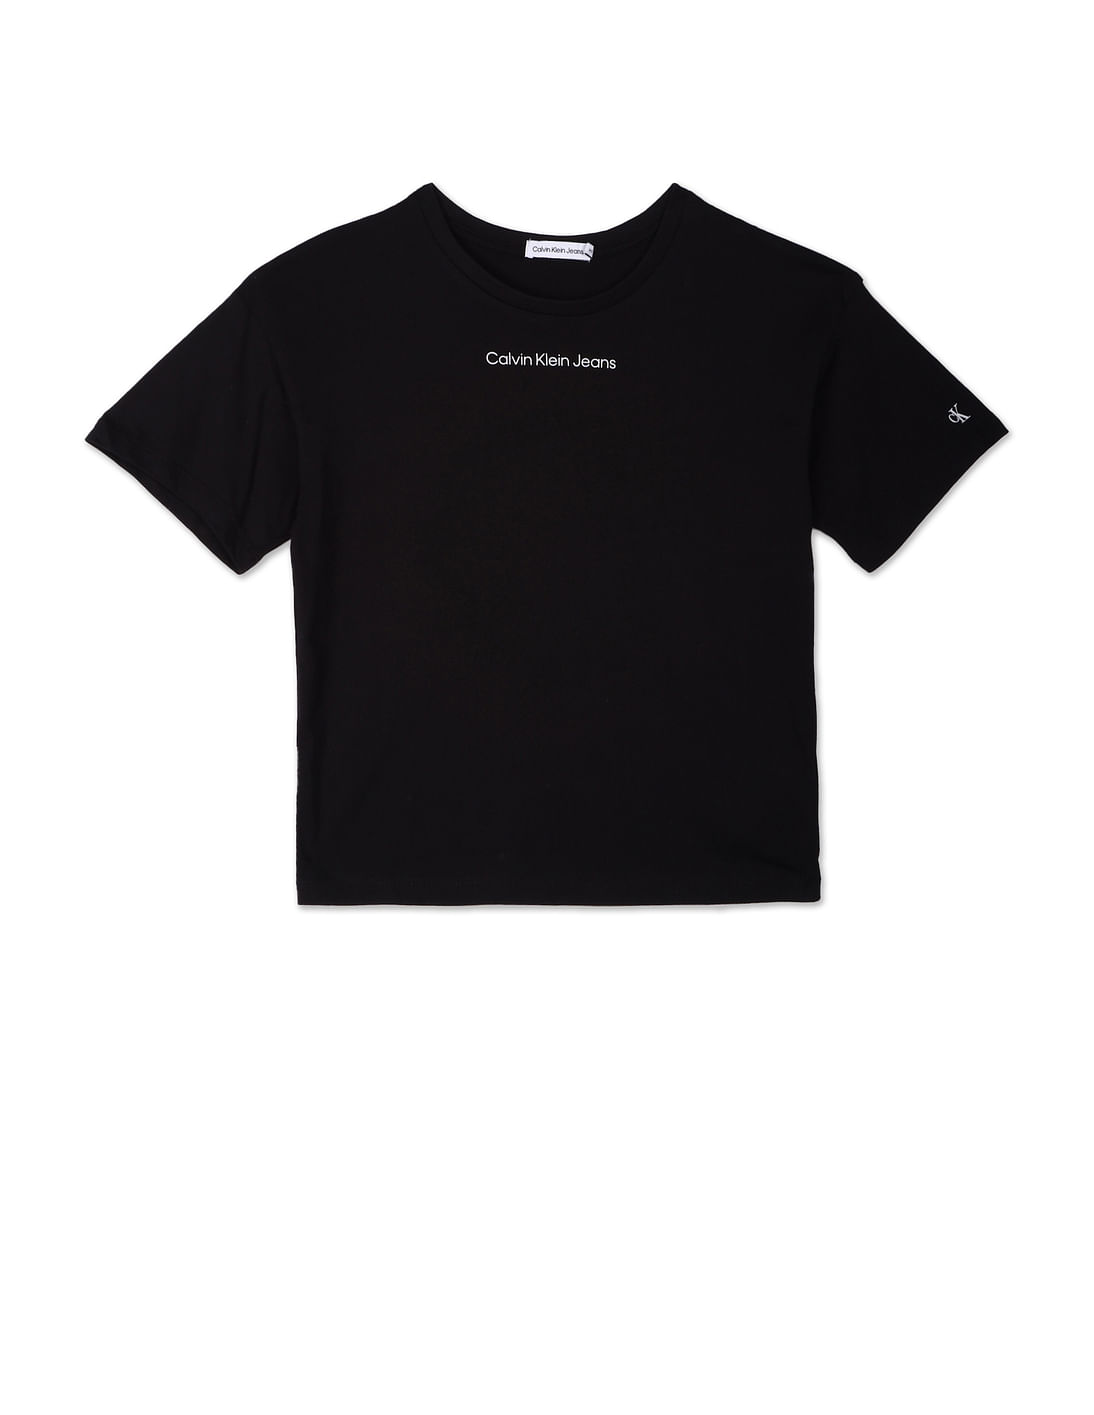 Printed Cotton Mens Calvin Klein Ck Round Neck Tshirt at Rs 280 in